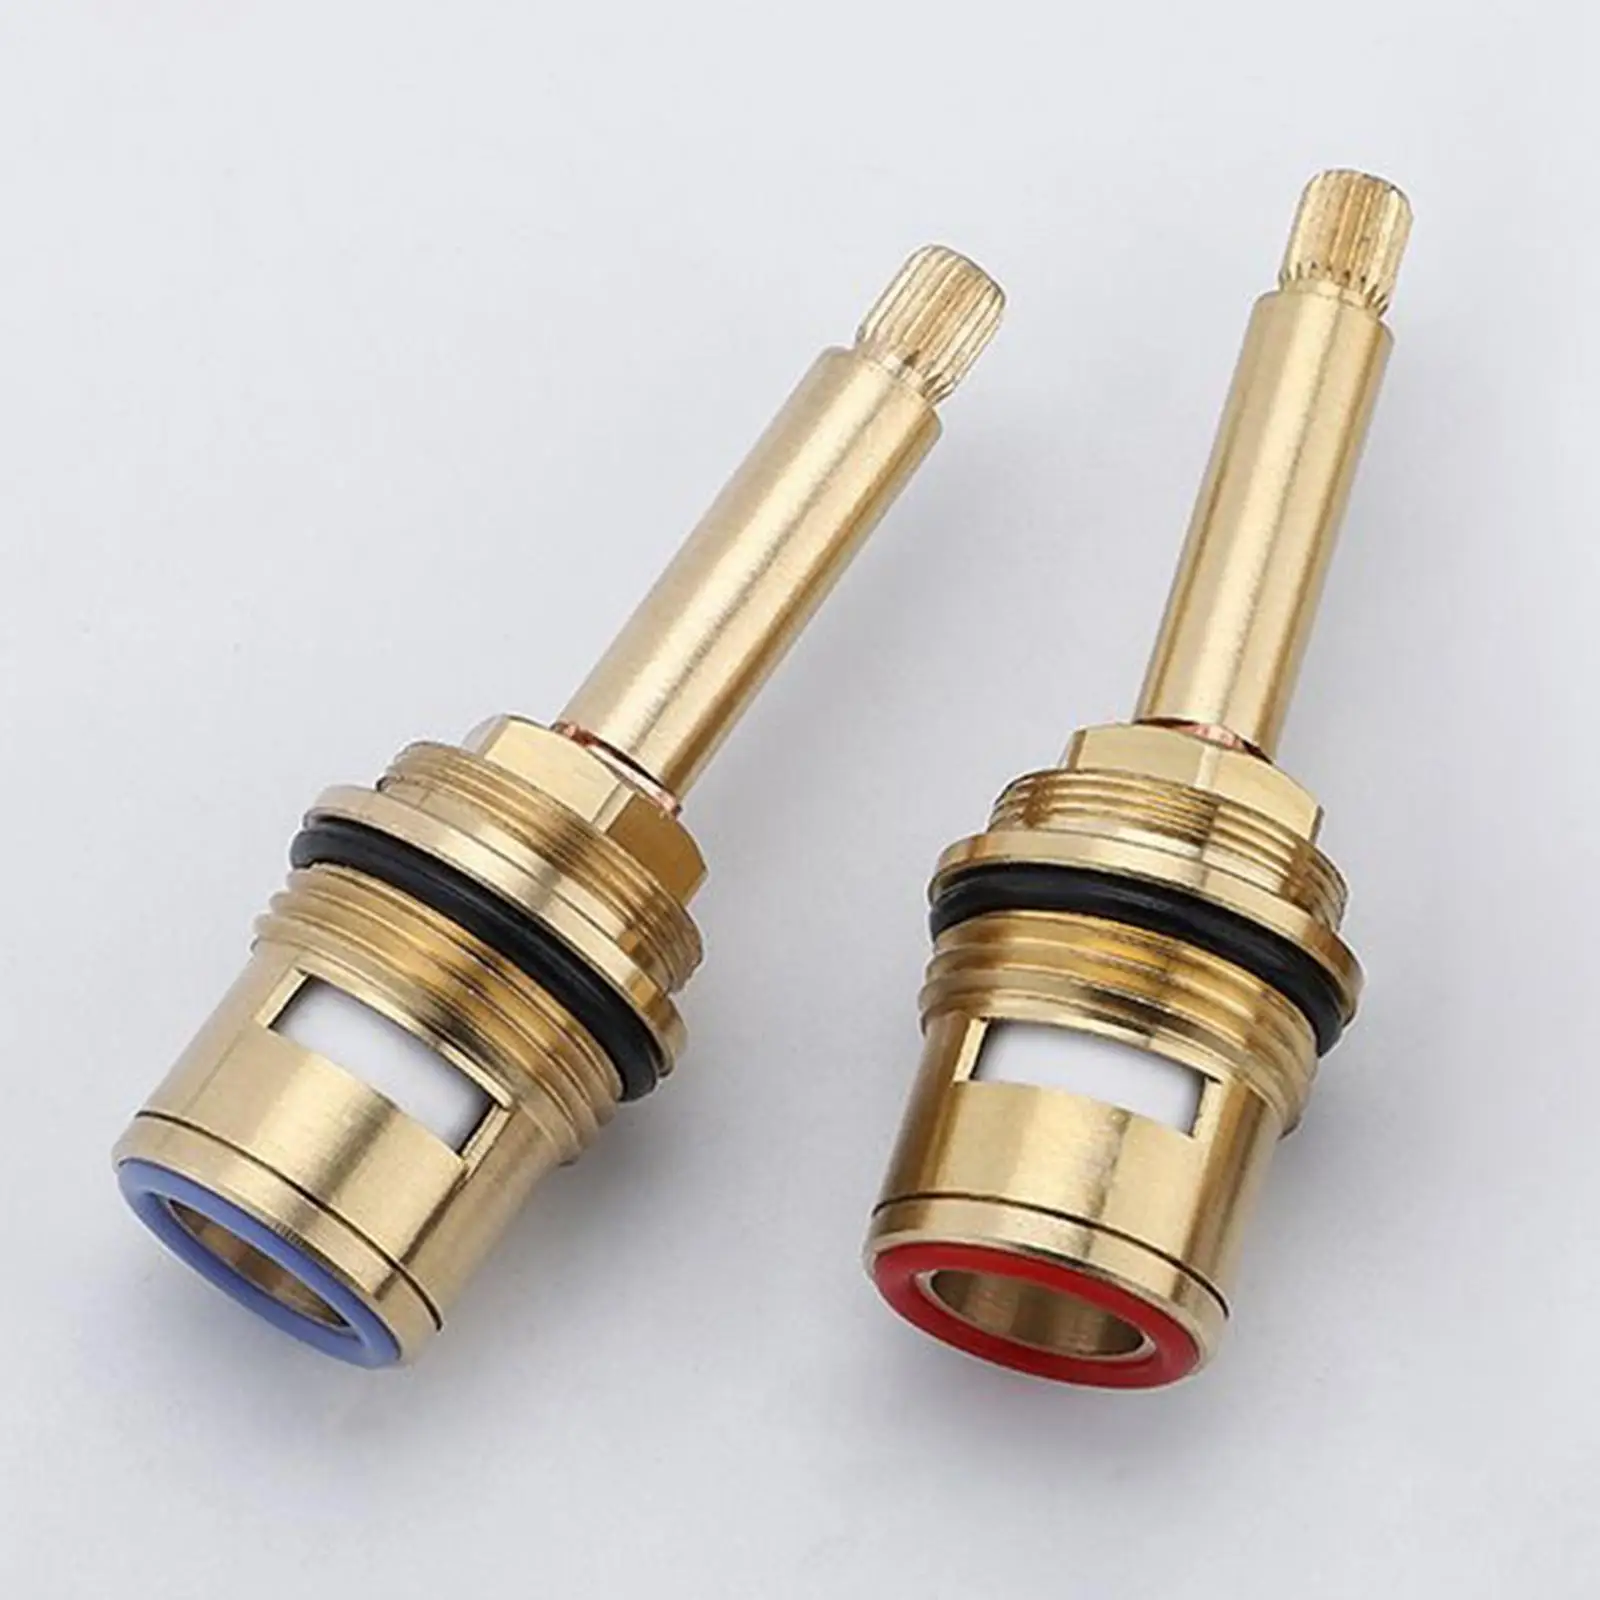 Faucet Valves Replacement Quarter Turn Brass Ceramic Stem Disc Cartridges Thread G3/4